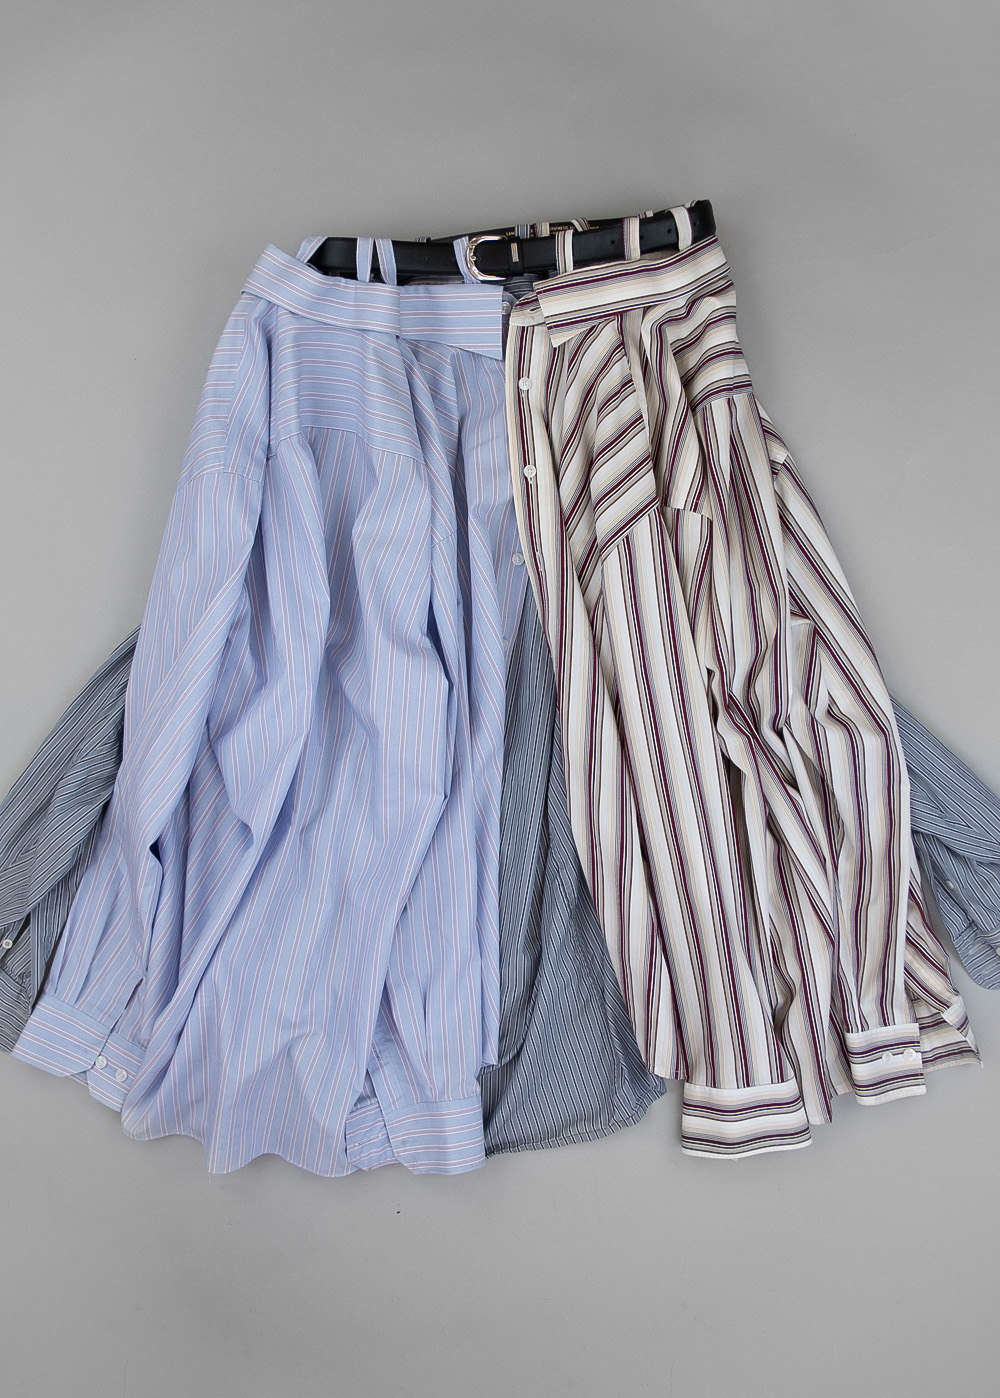 Belted 3-Skirt 1